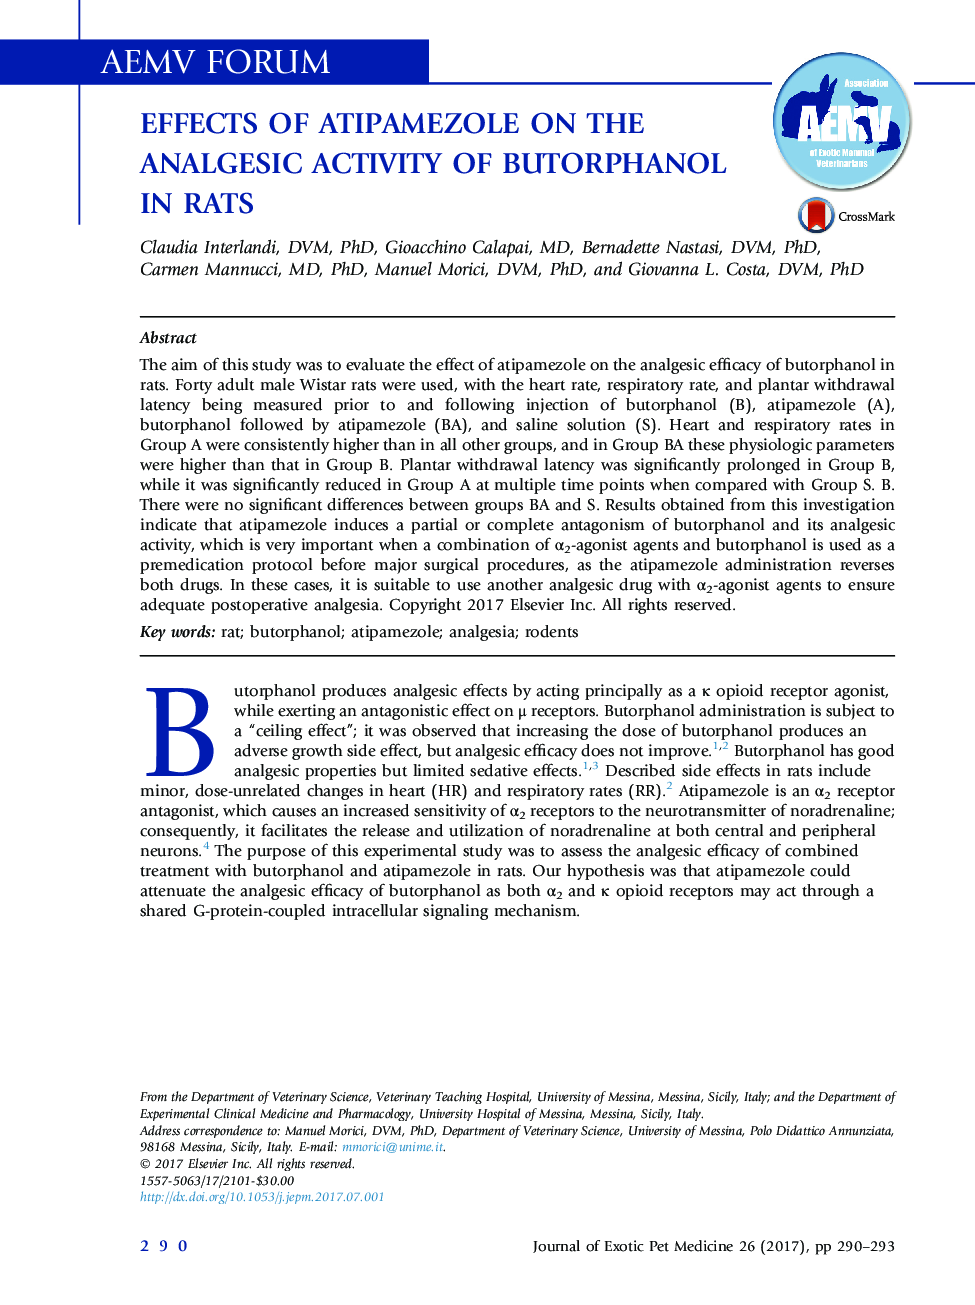 AEMV ForumEffects of Atipamezole on the Analgesic Activity of Butorphanol in Rats